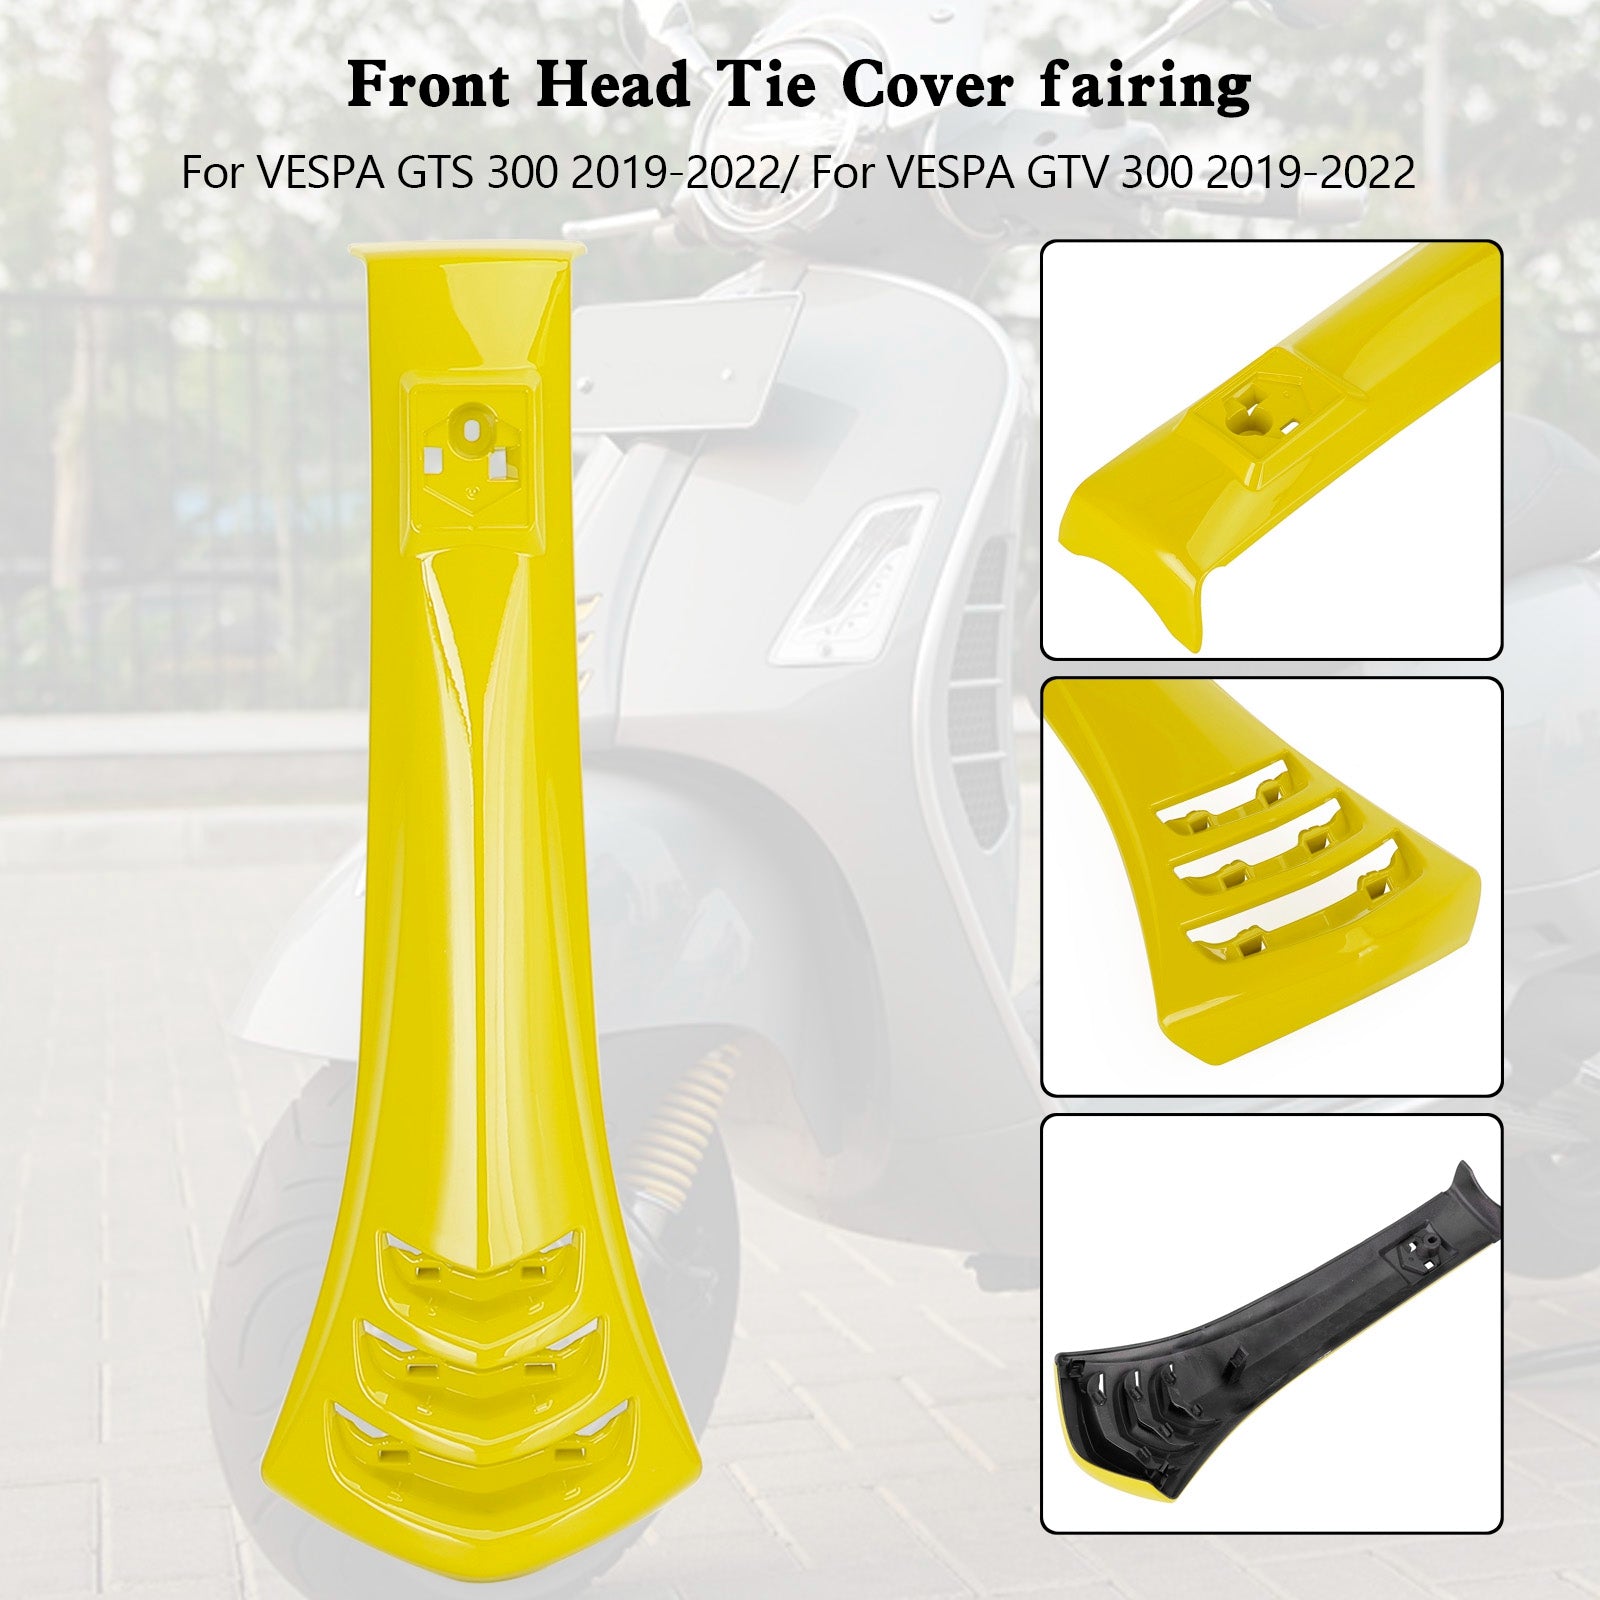 Steering Horn Head Cover fairing Tie For VESPA GTS300 GTV300 2019-2022